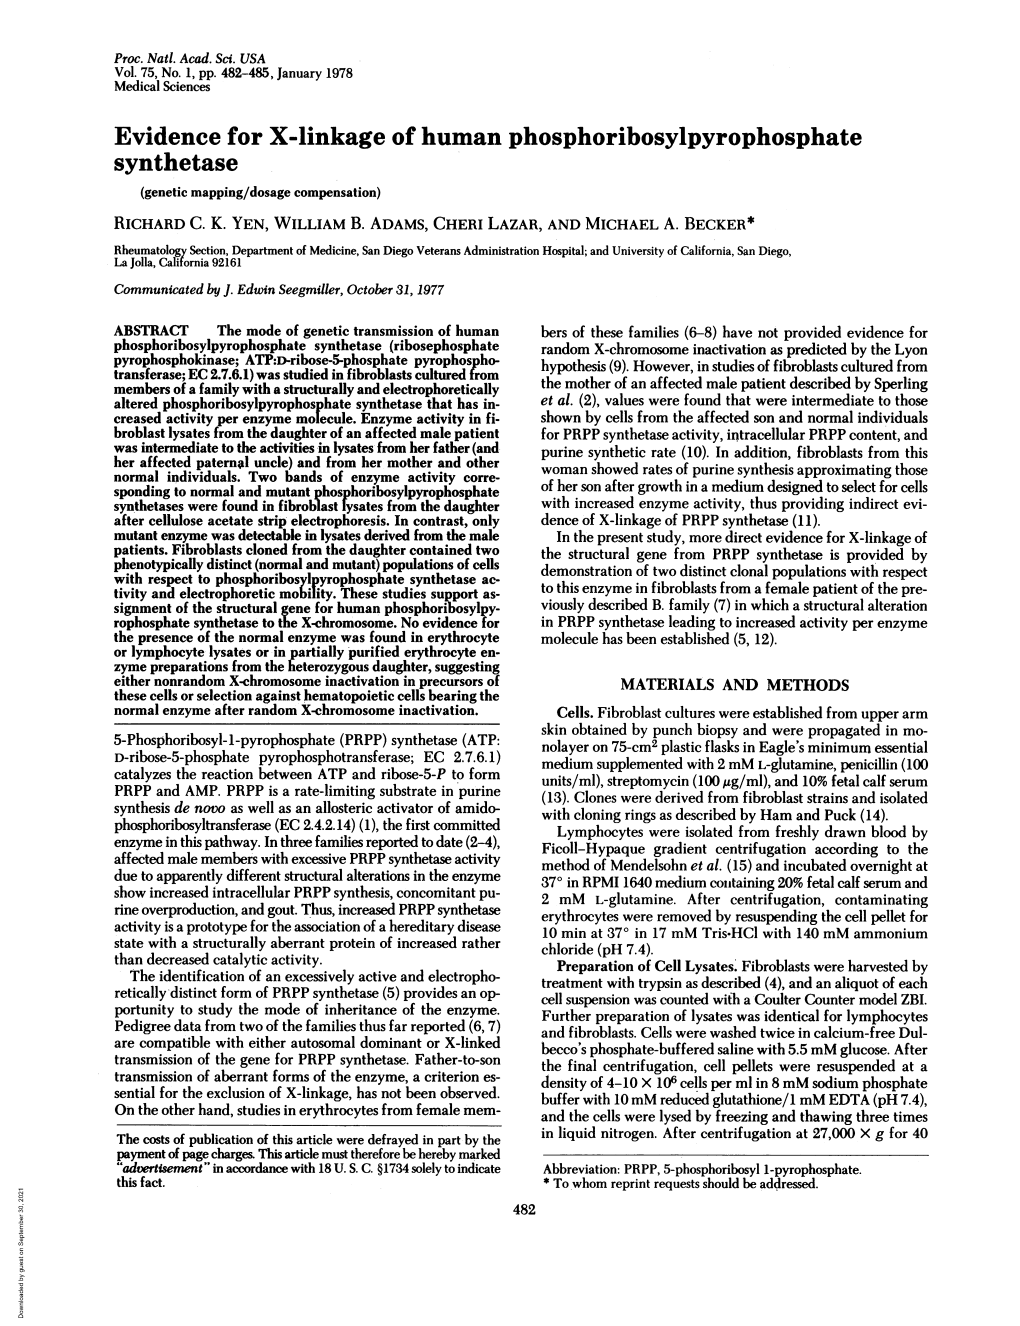 Evidence for X-Linkage of Human Phosphoribosylpyrophosphate Synthetase (Genetic Mapping/Dosage Compensation) RICHARD C